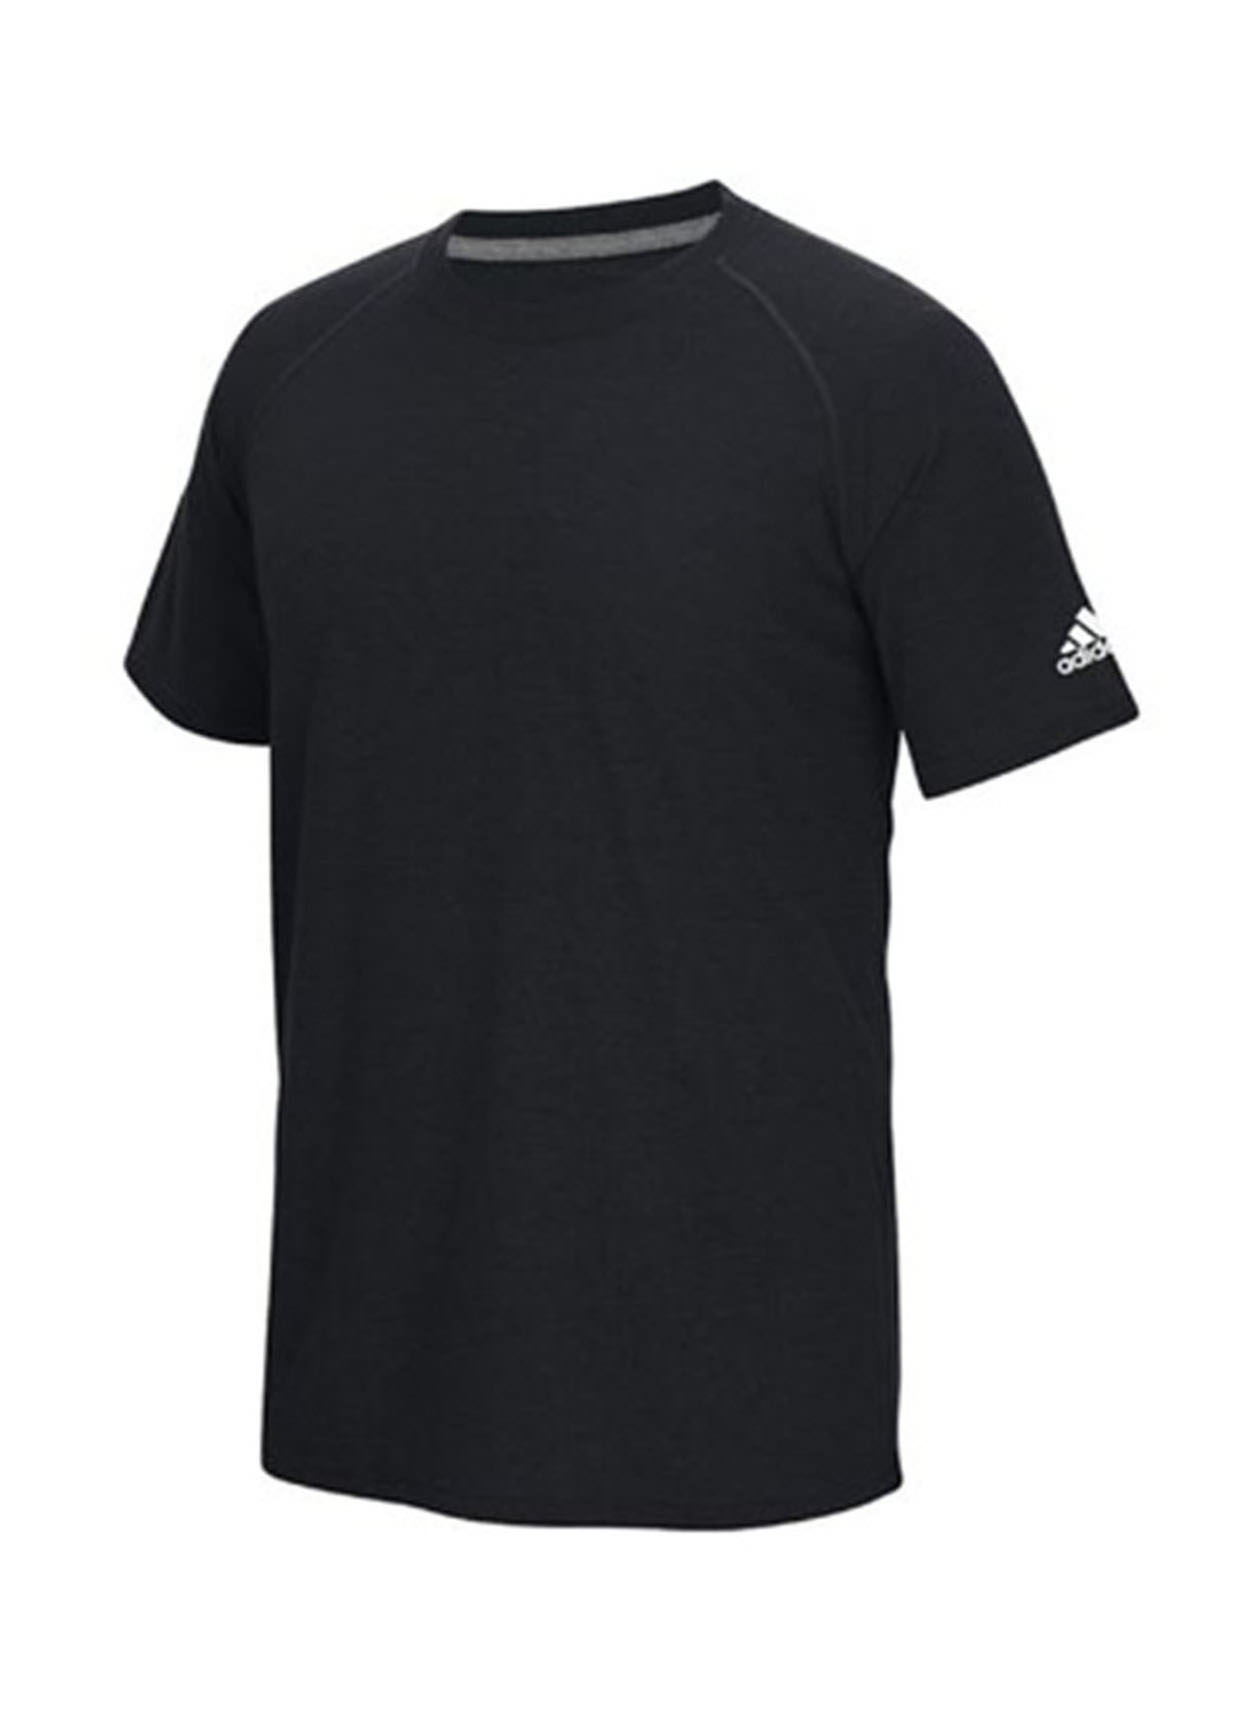 Adidas Men's Black Climalite Ultimate T-Shirt